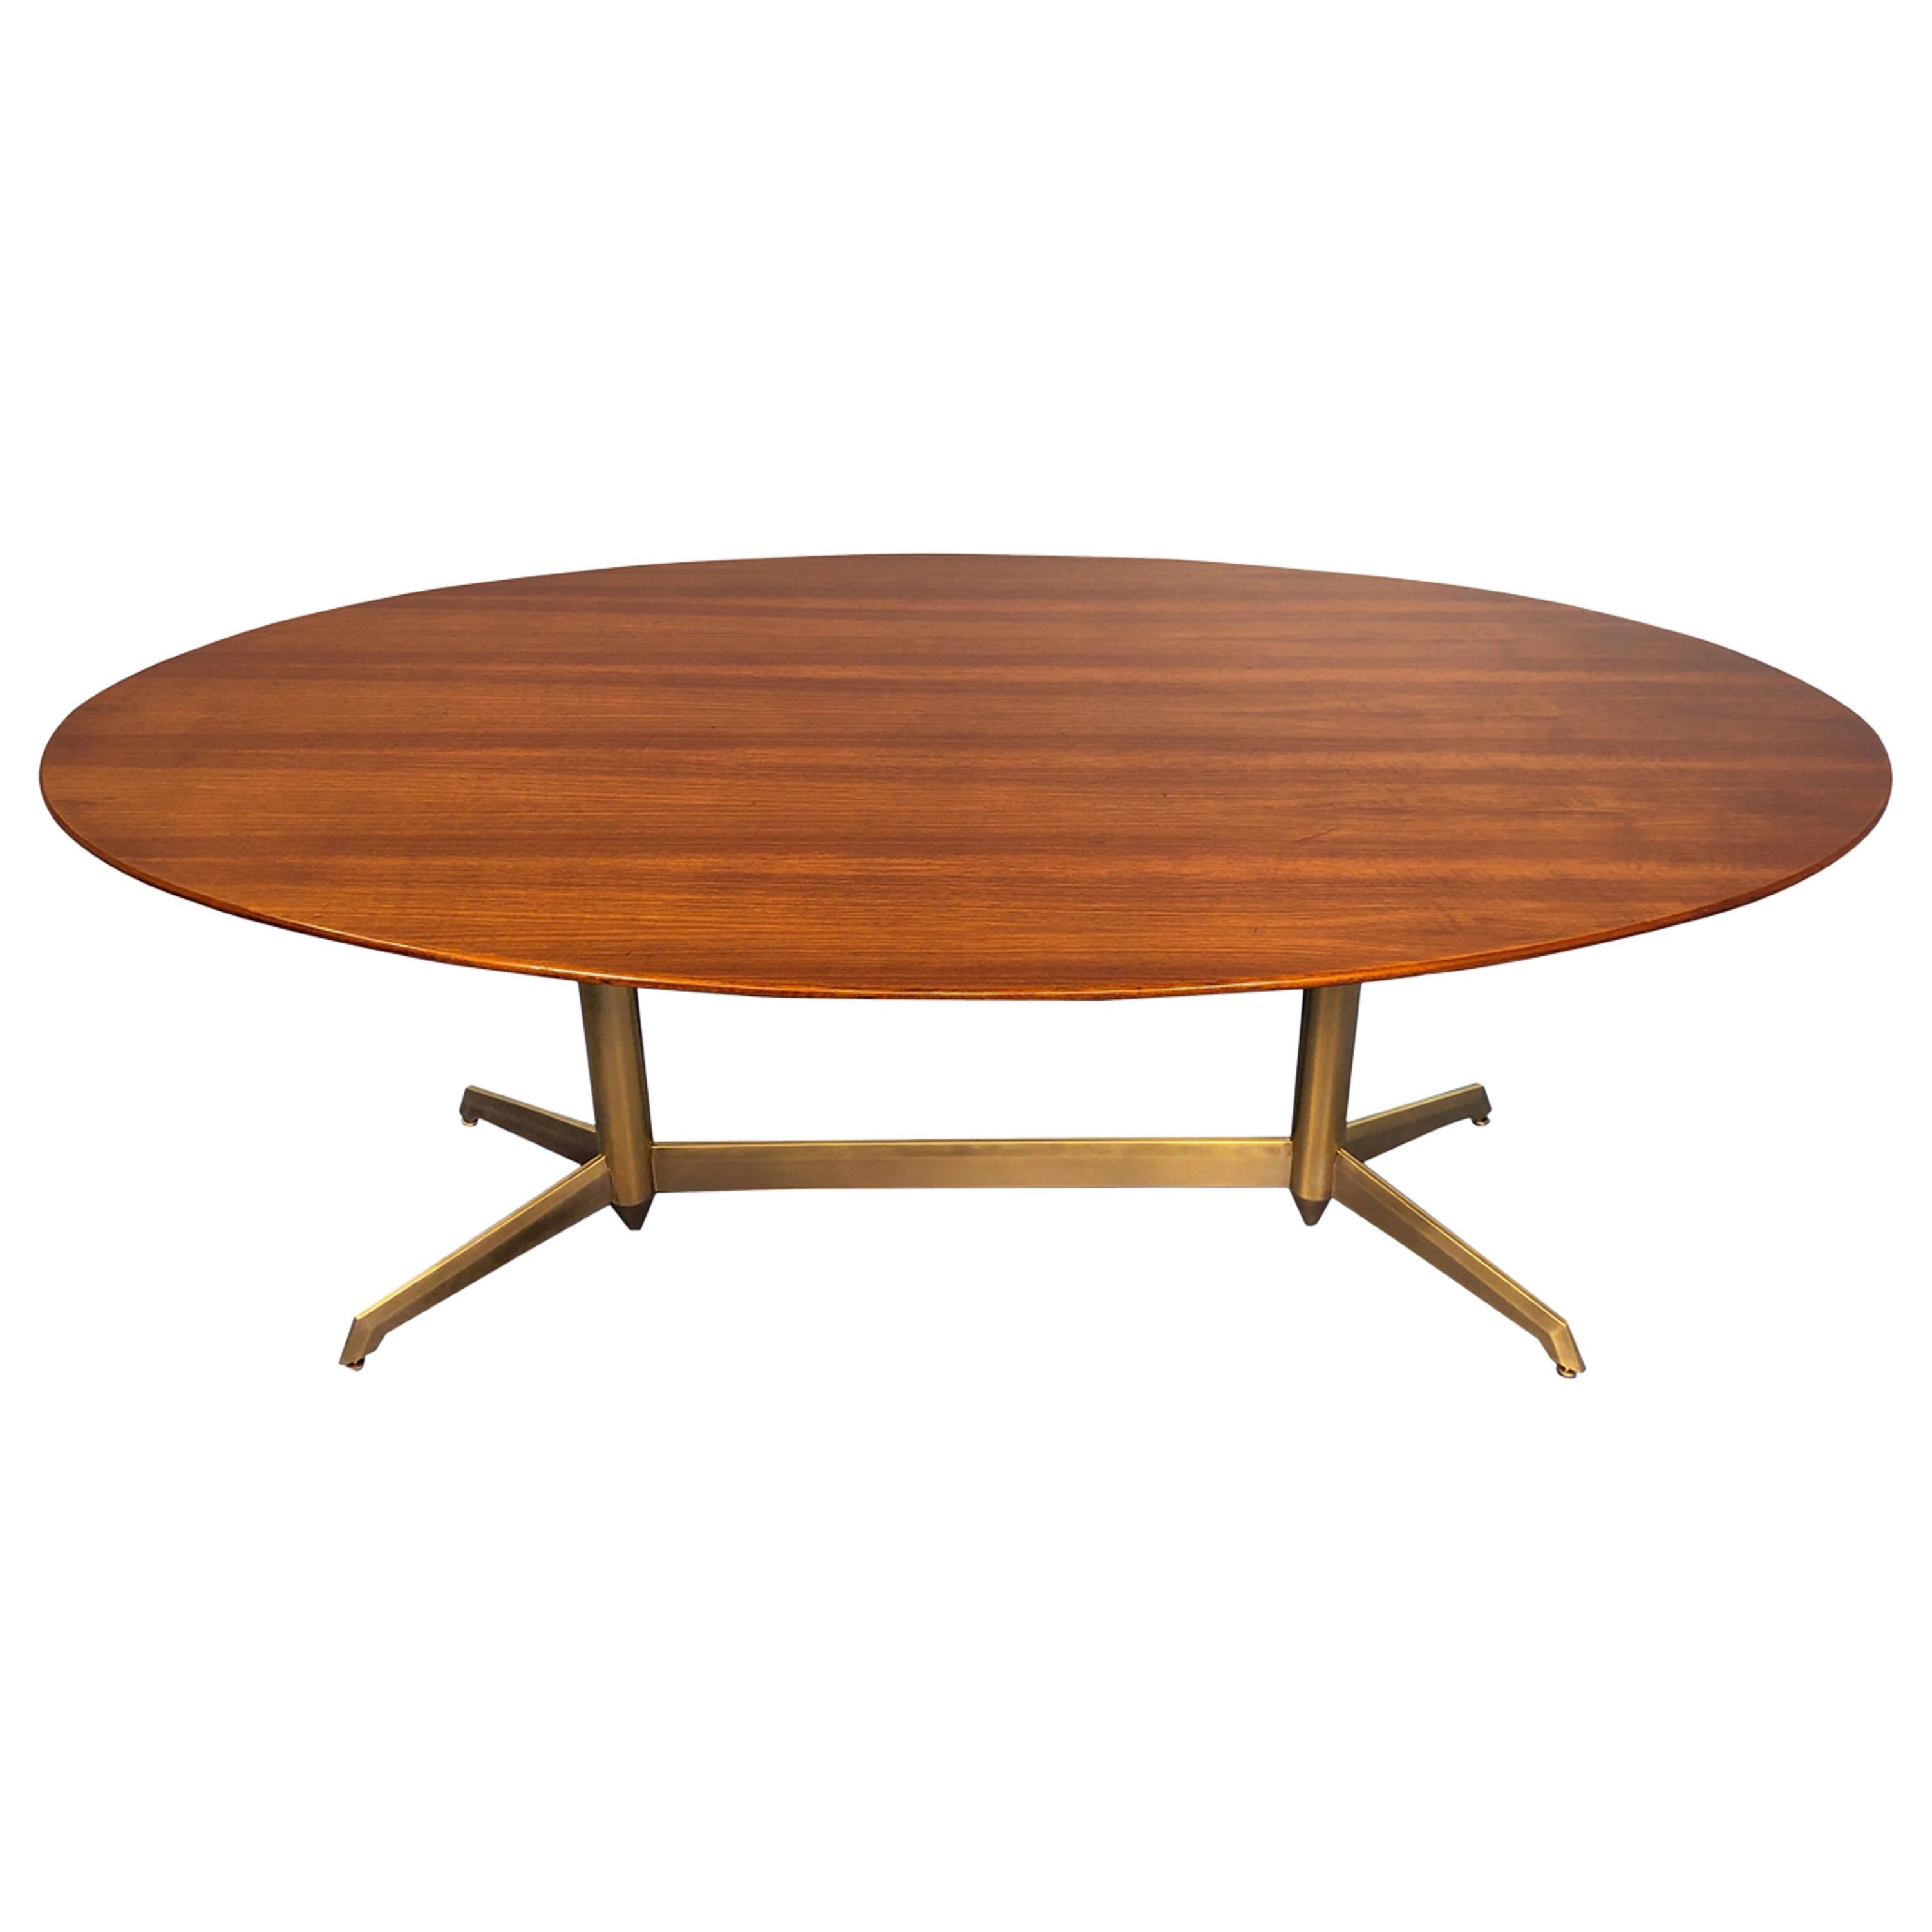 Italian Midcentury Oval Walnut Dining Table, 1950s